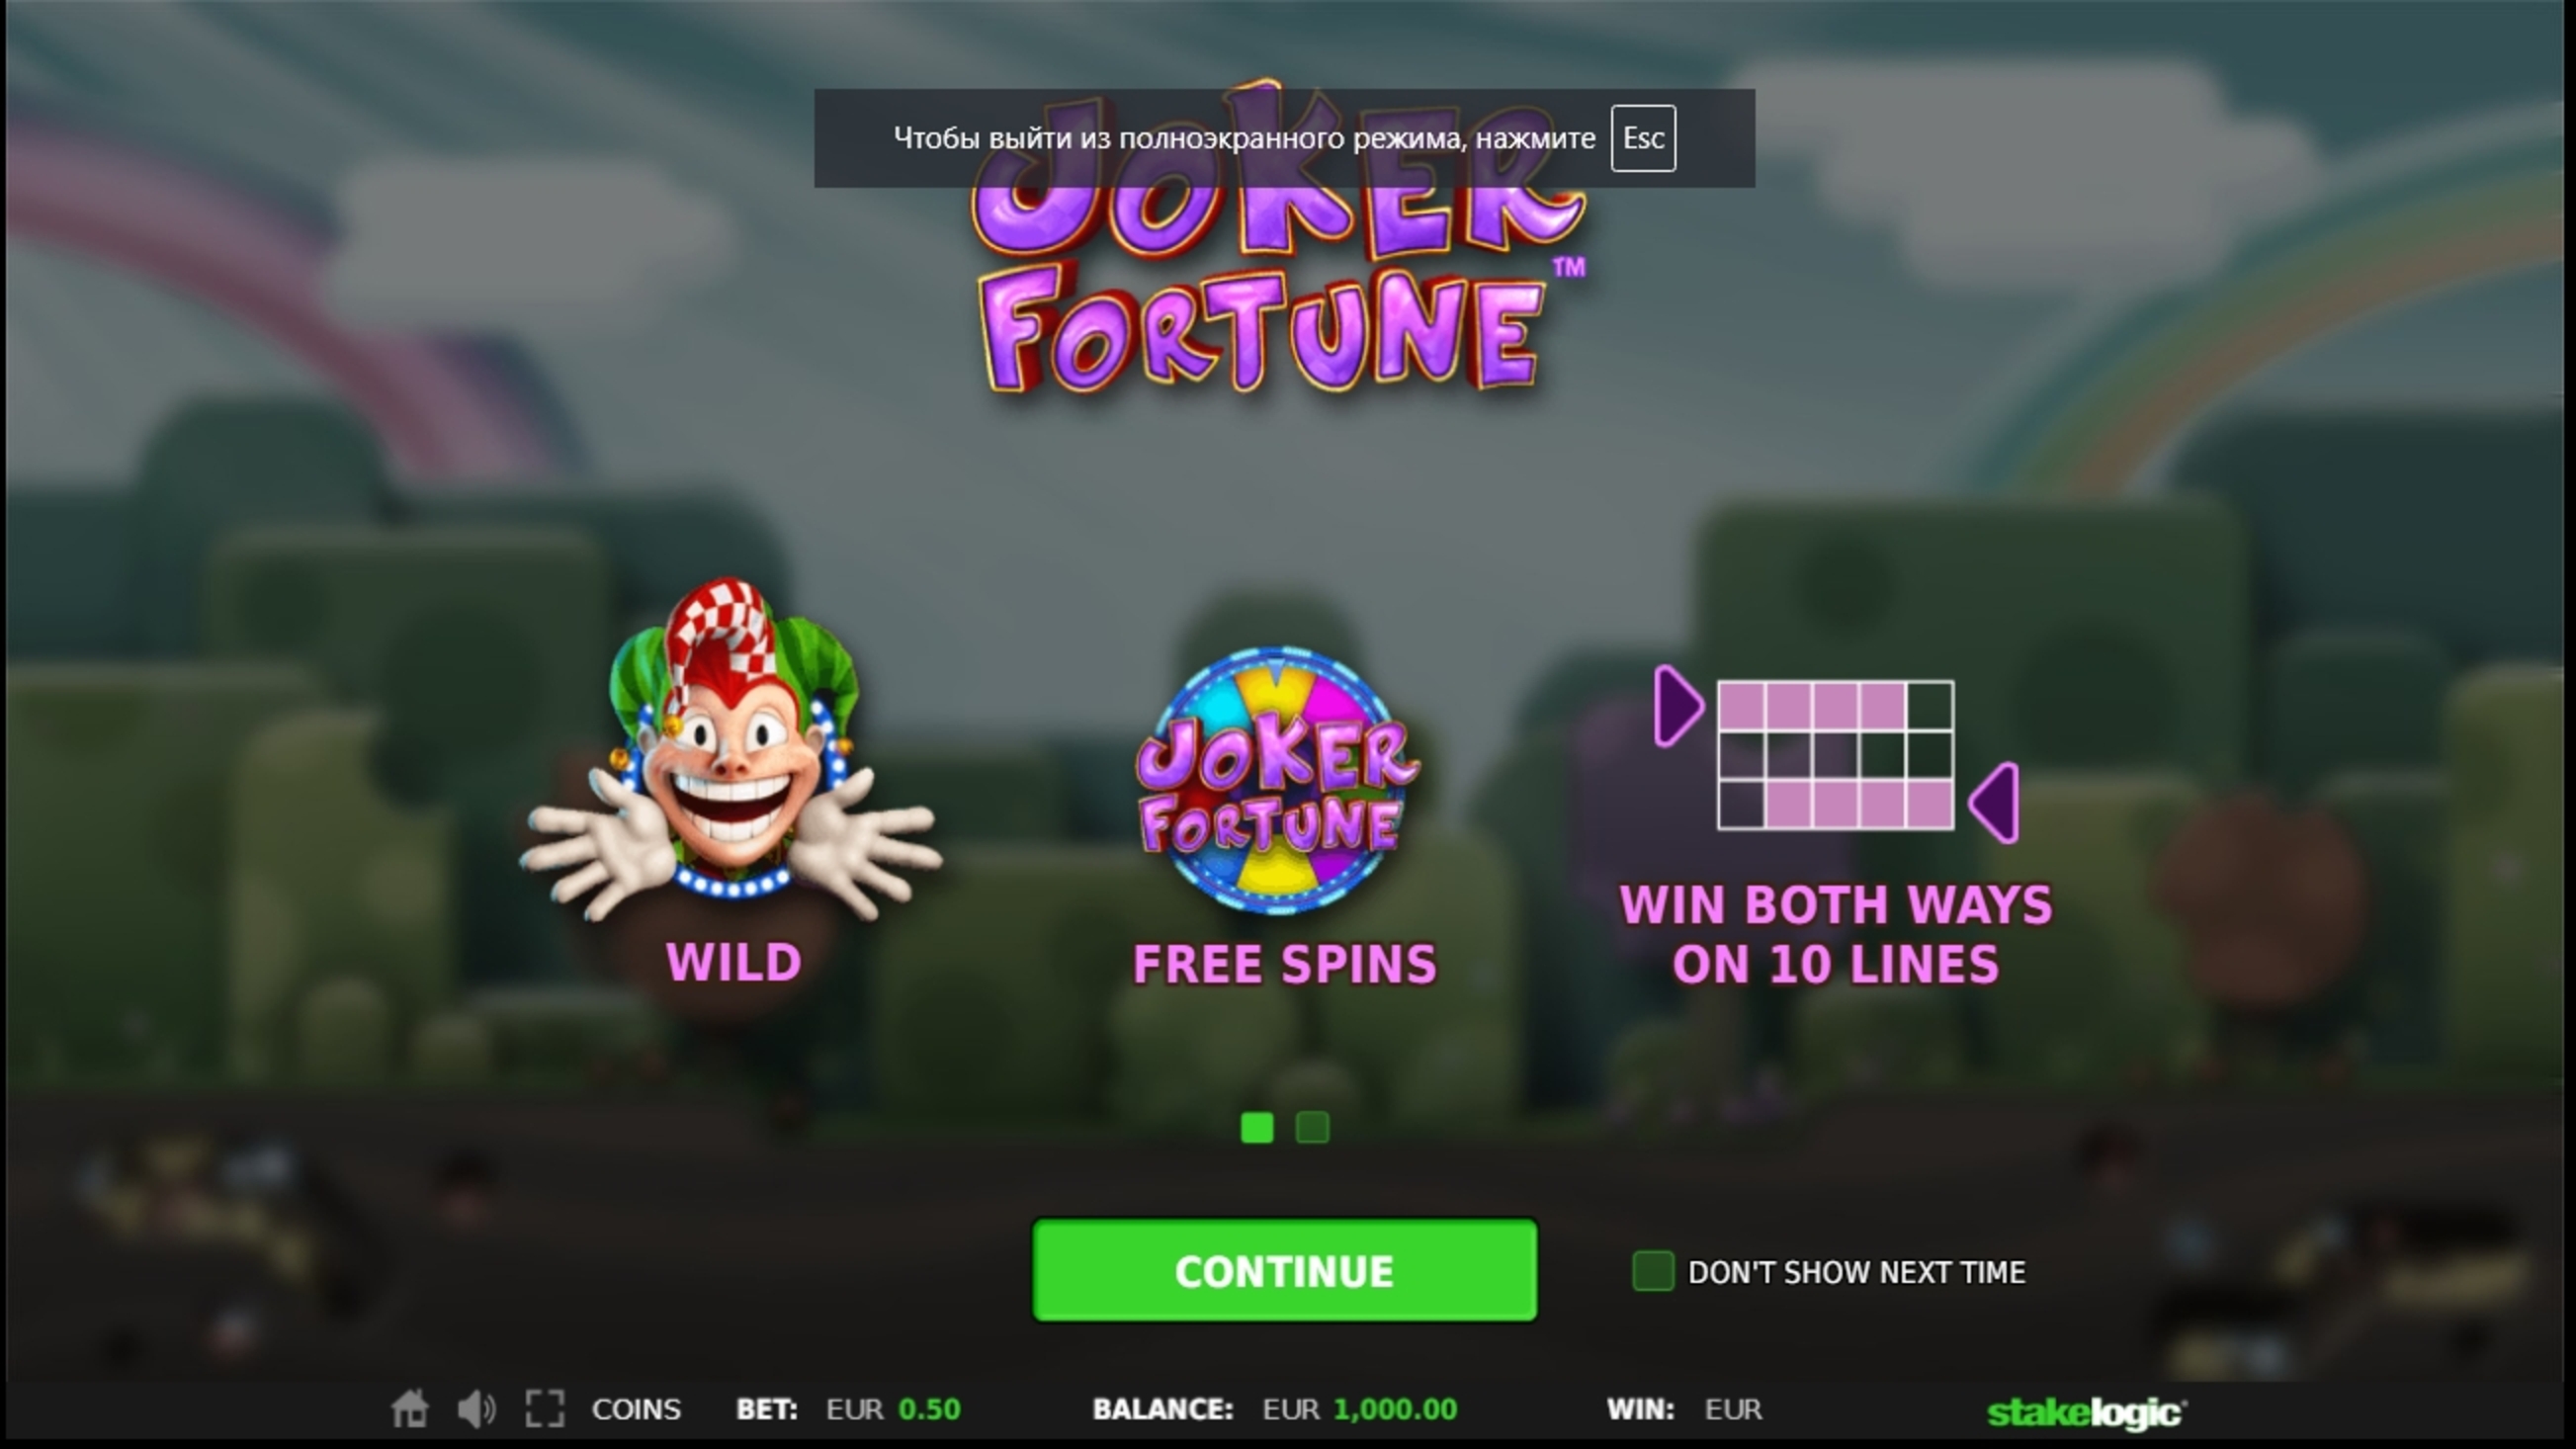 Play Joker Fortune Free Casino Slot Game by Stakelogic